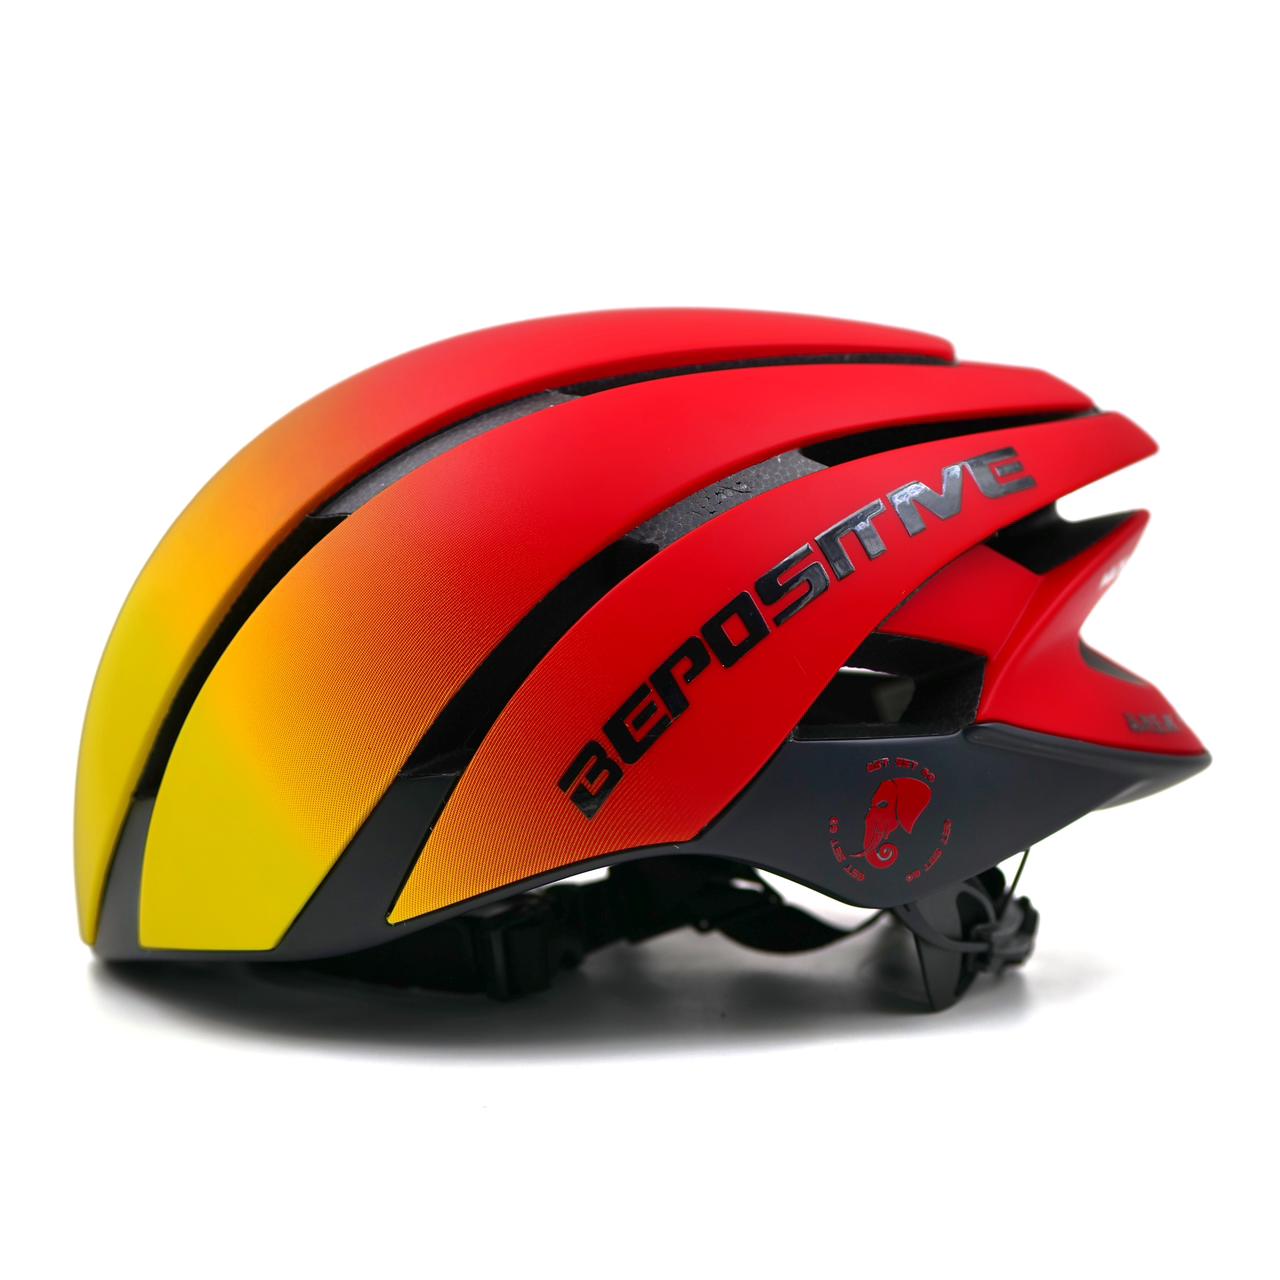 Watts Cycling Helmet